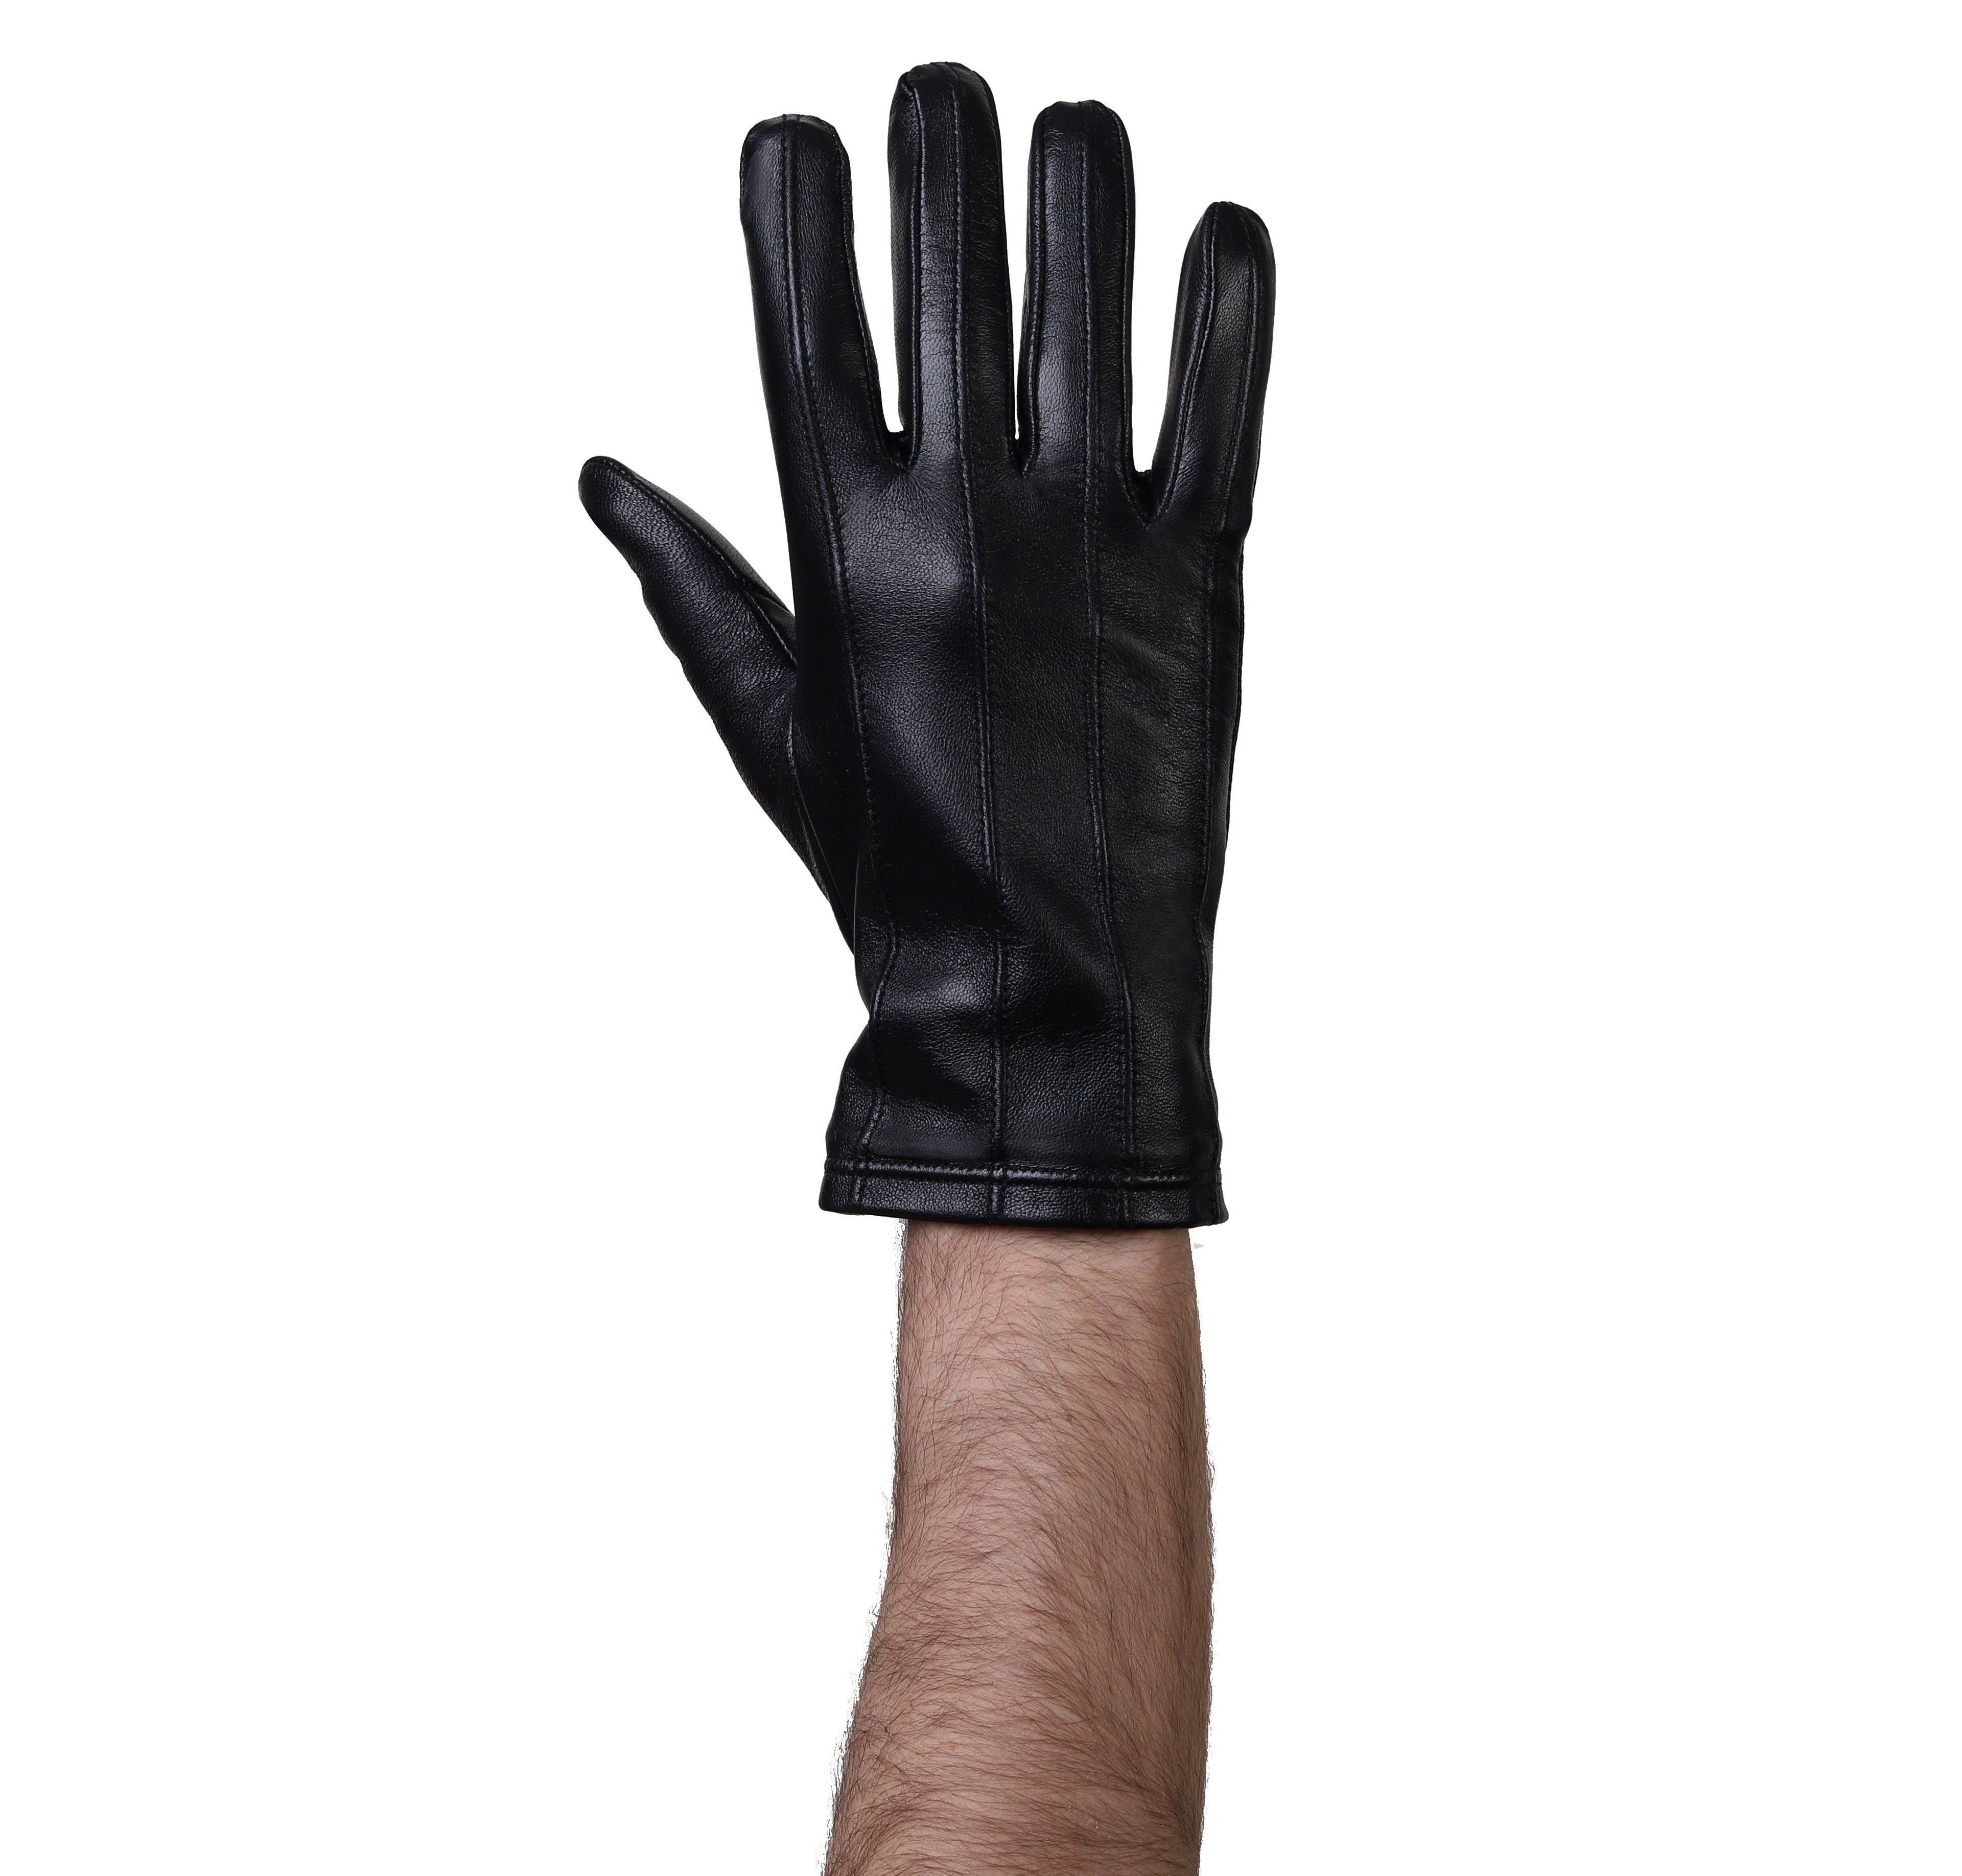 Quattro Leather Gloves for Men